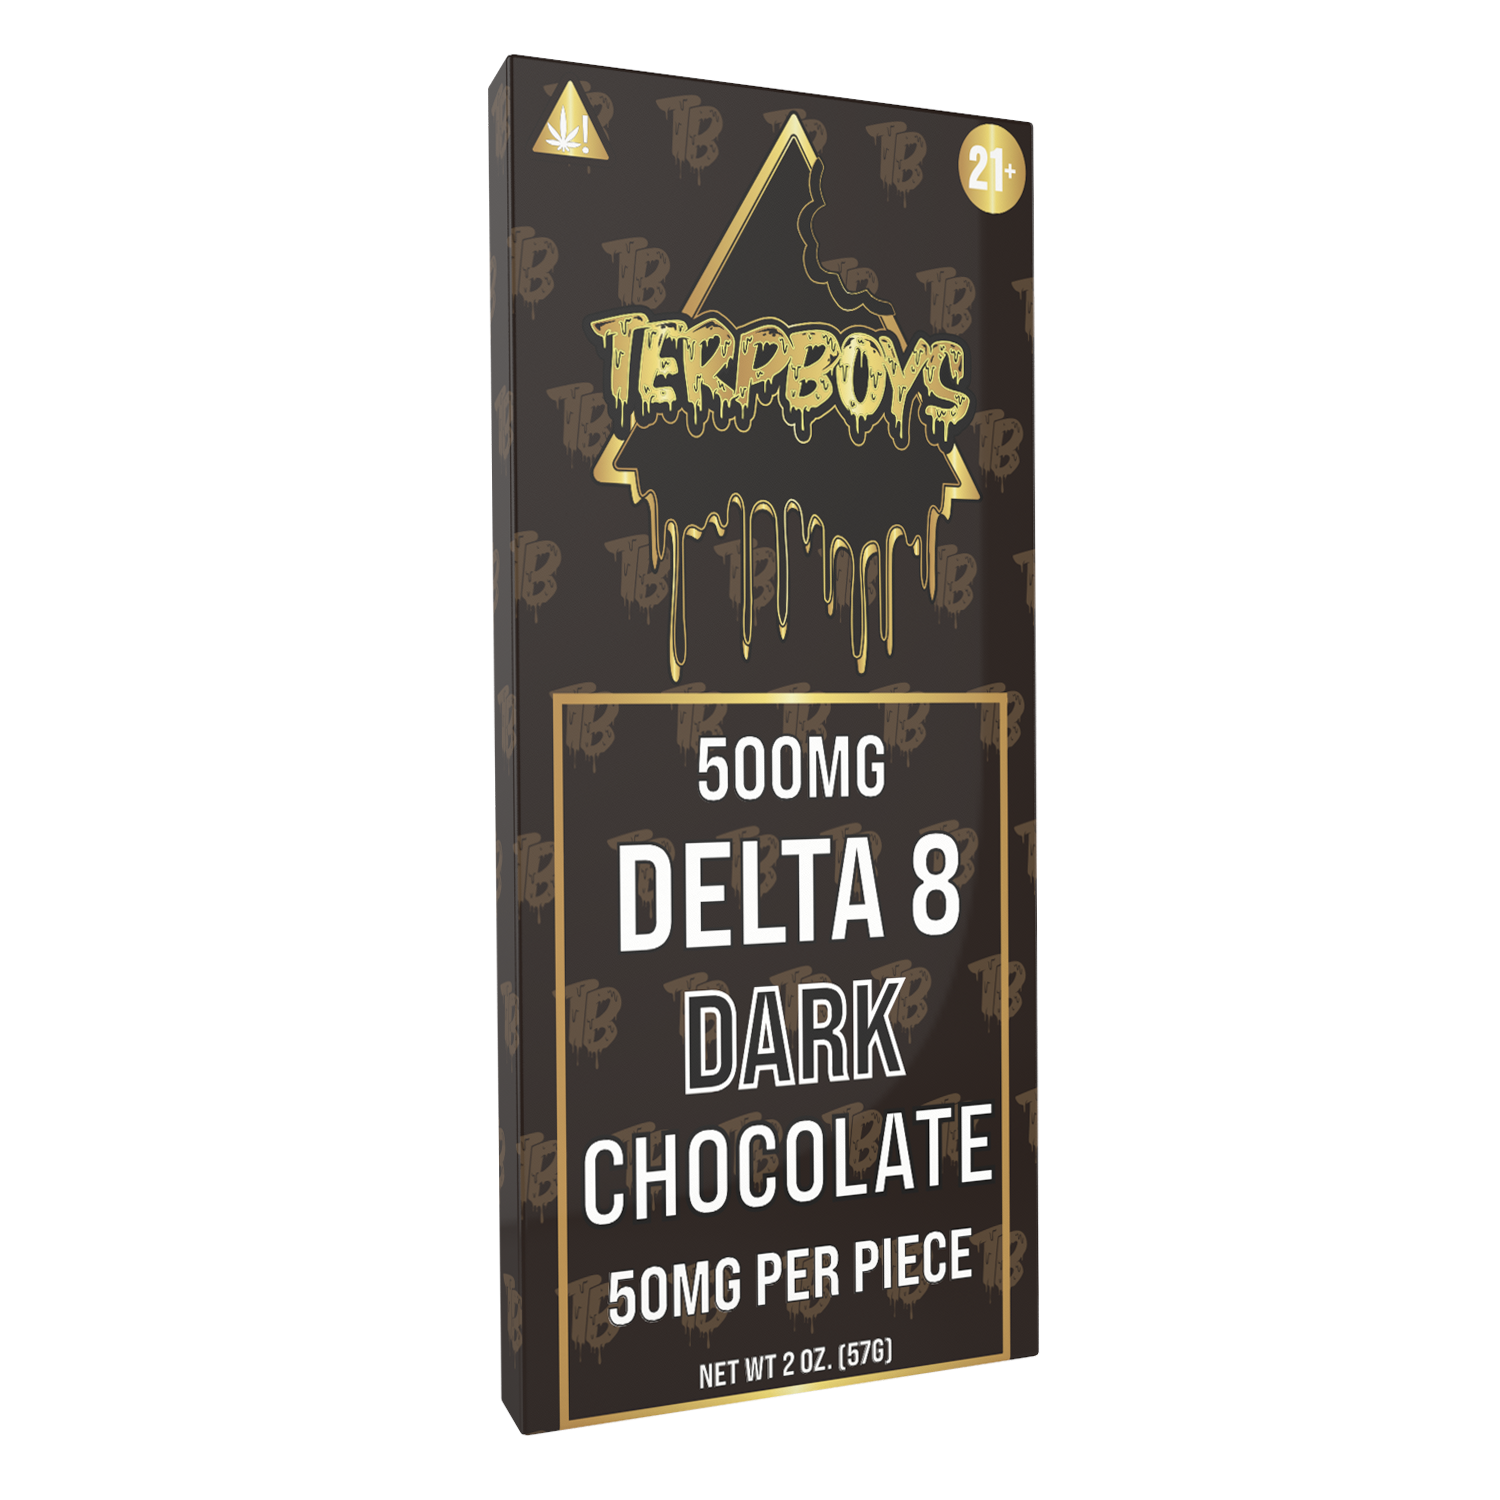 Terpboys Delta 8 Chocolate Bars - 500mg